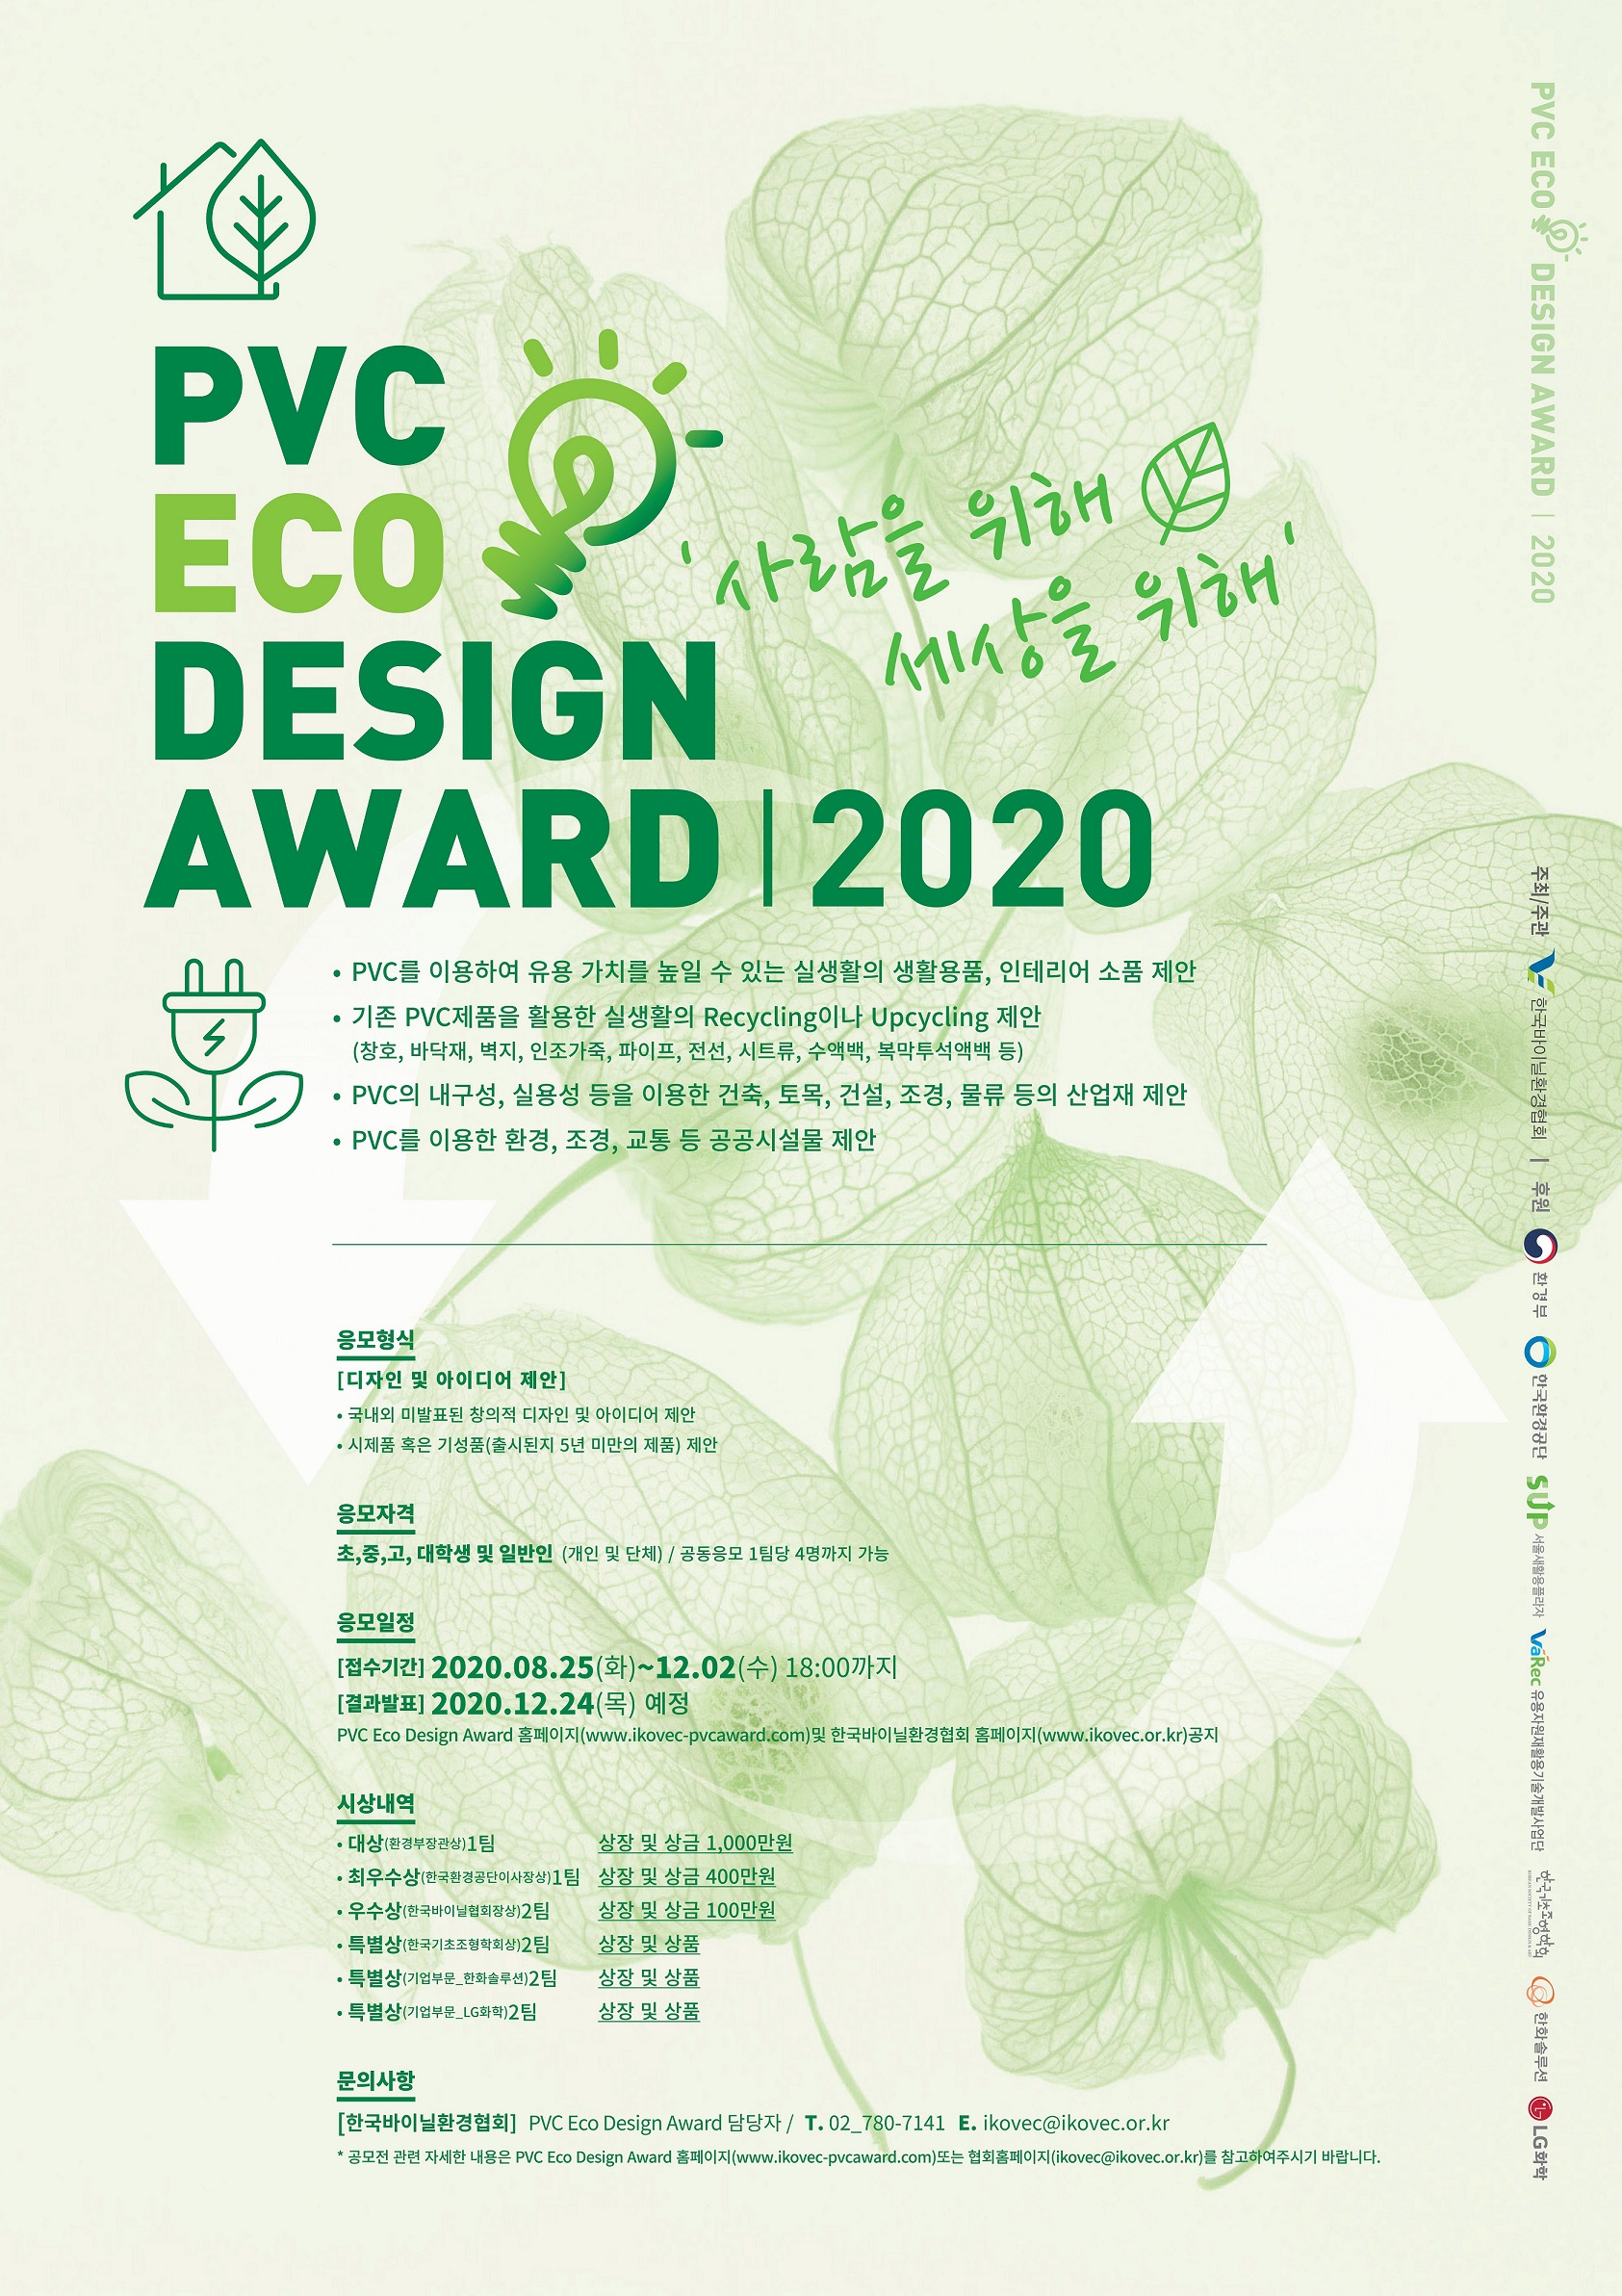 PVC ECO Design Award 2020